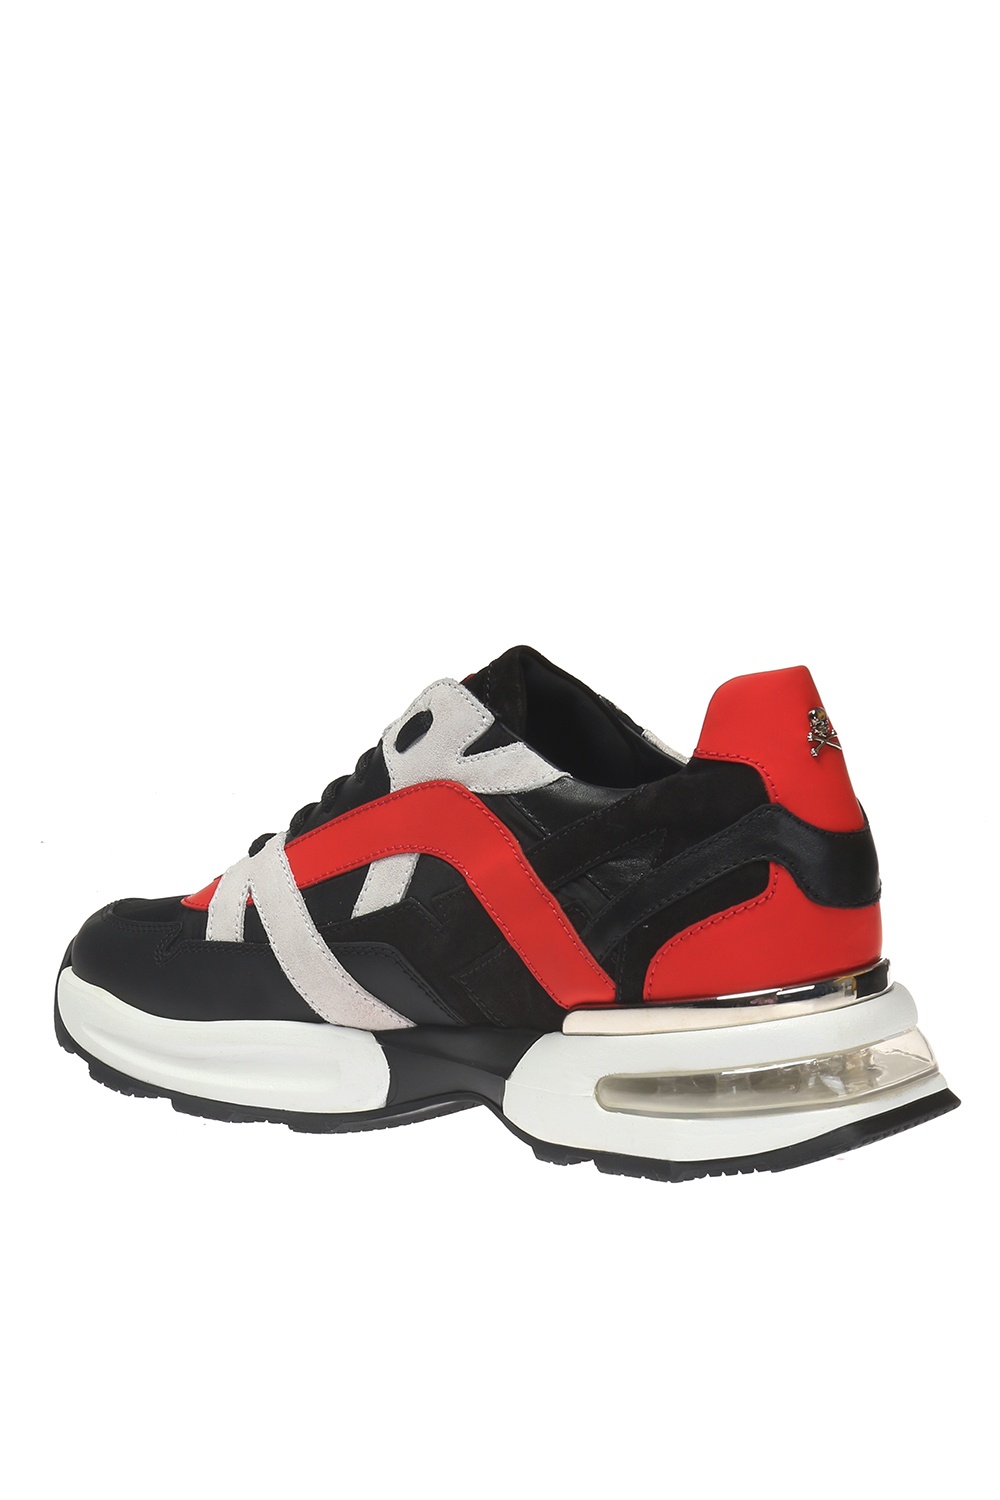 Philipp Plein 'Runner' sneakers | Men's Shoes | Vitkac